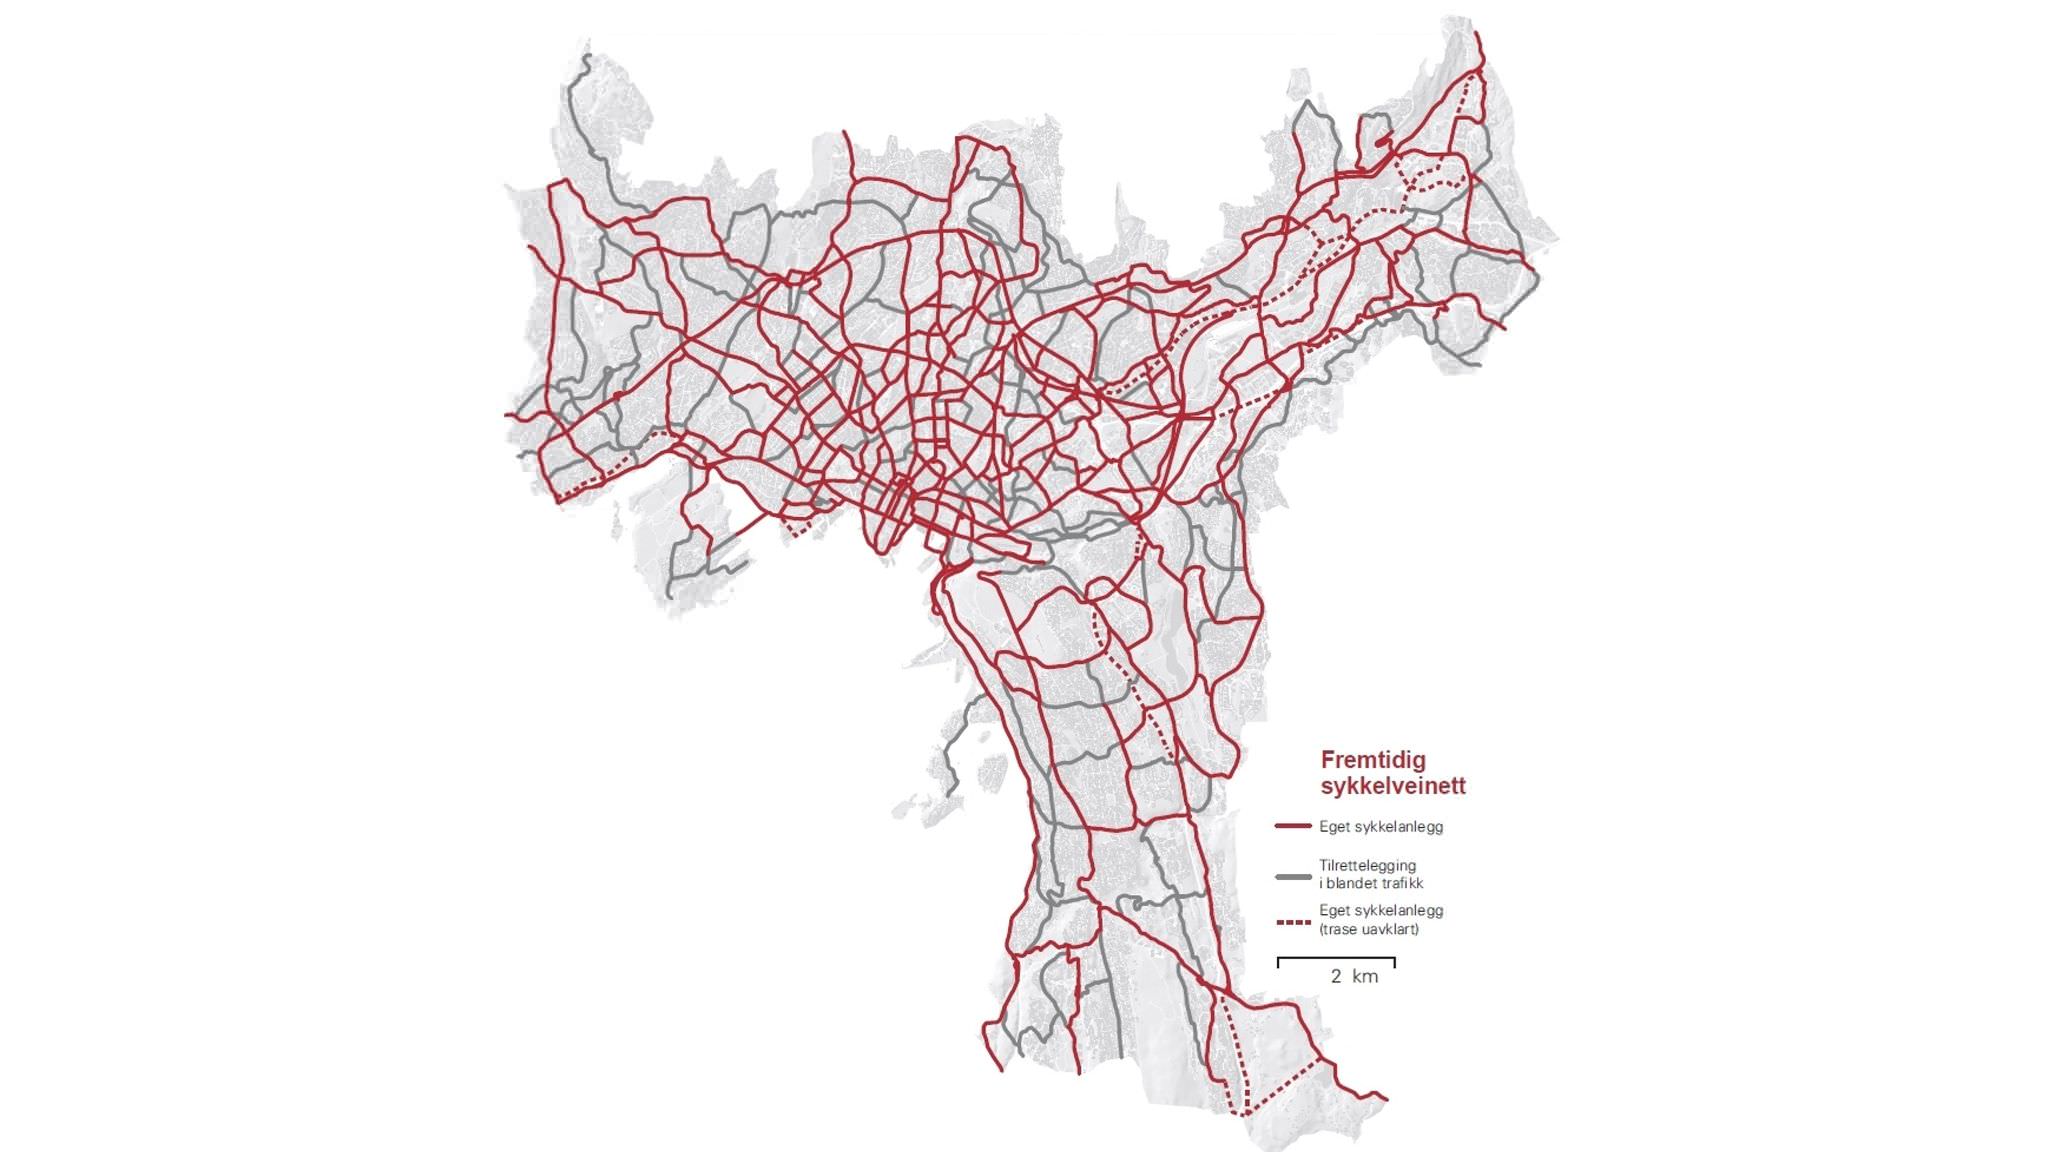 Radwege Oslo Radwegenetz 2025 Zielzustand